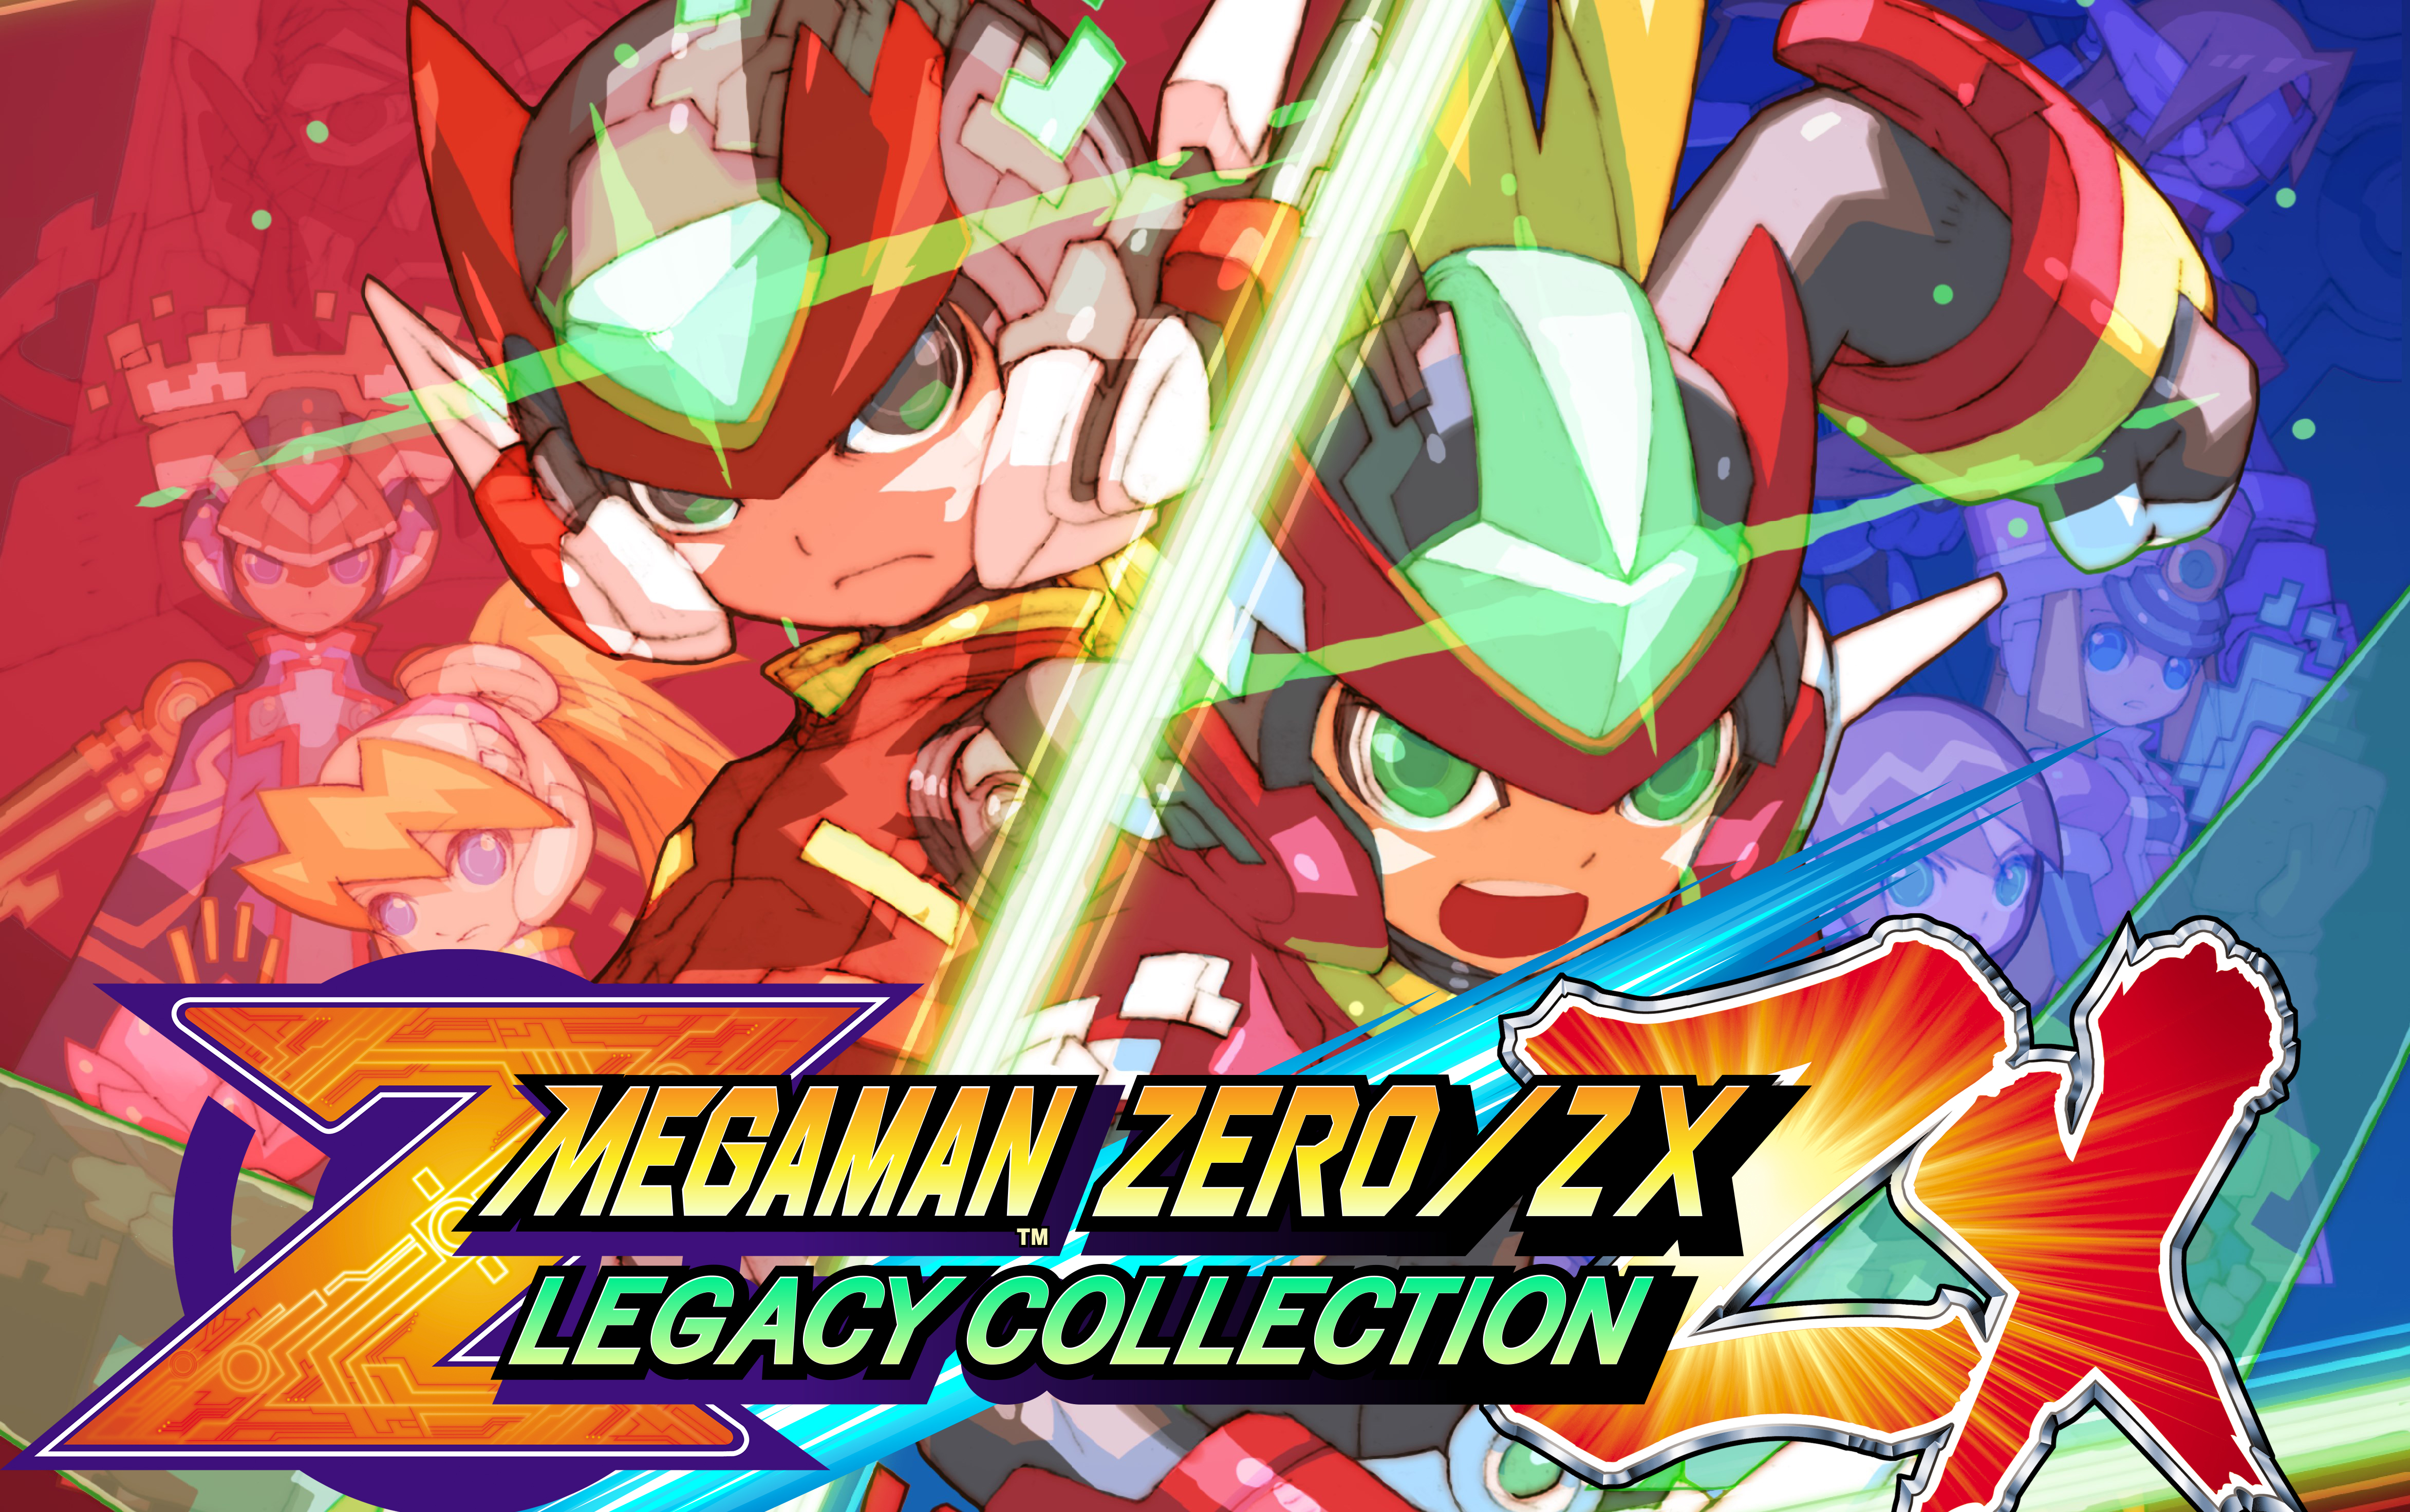 Koleksi Mega Man Zero / ZX Legacy diumumkan untuk Steam dan Console - Persyaratan PC, Screenshot dan Trailer